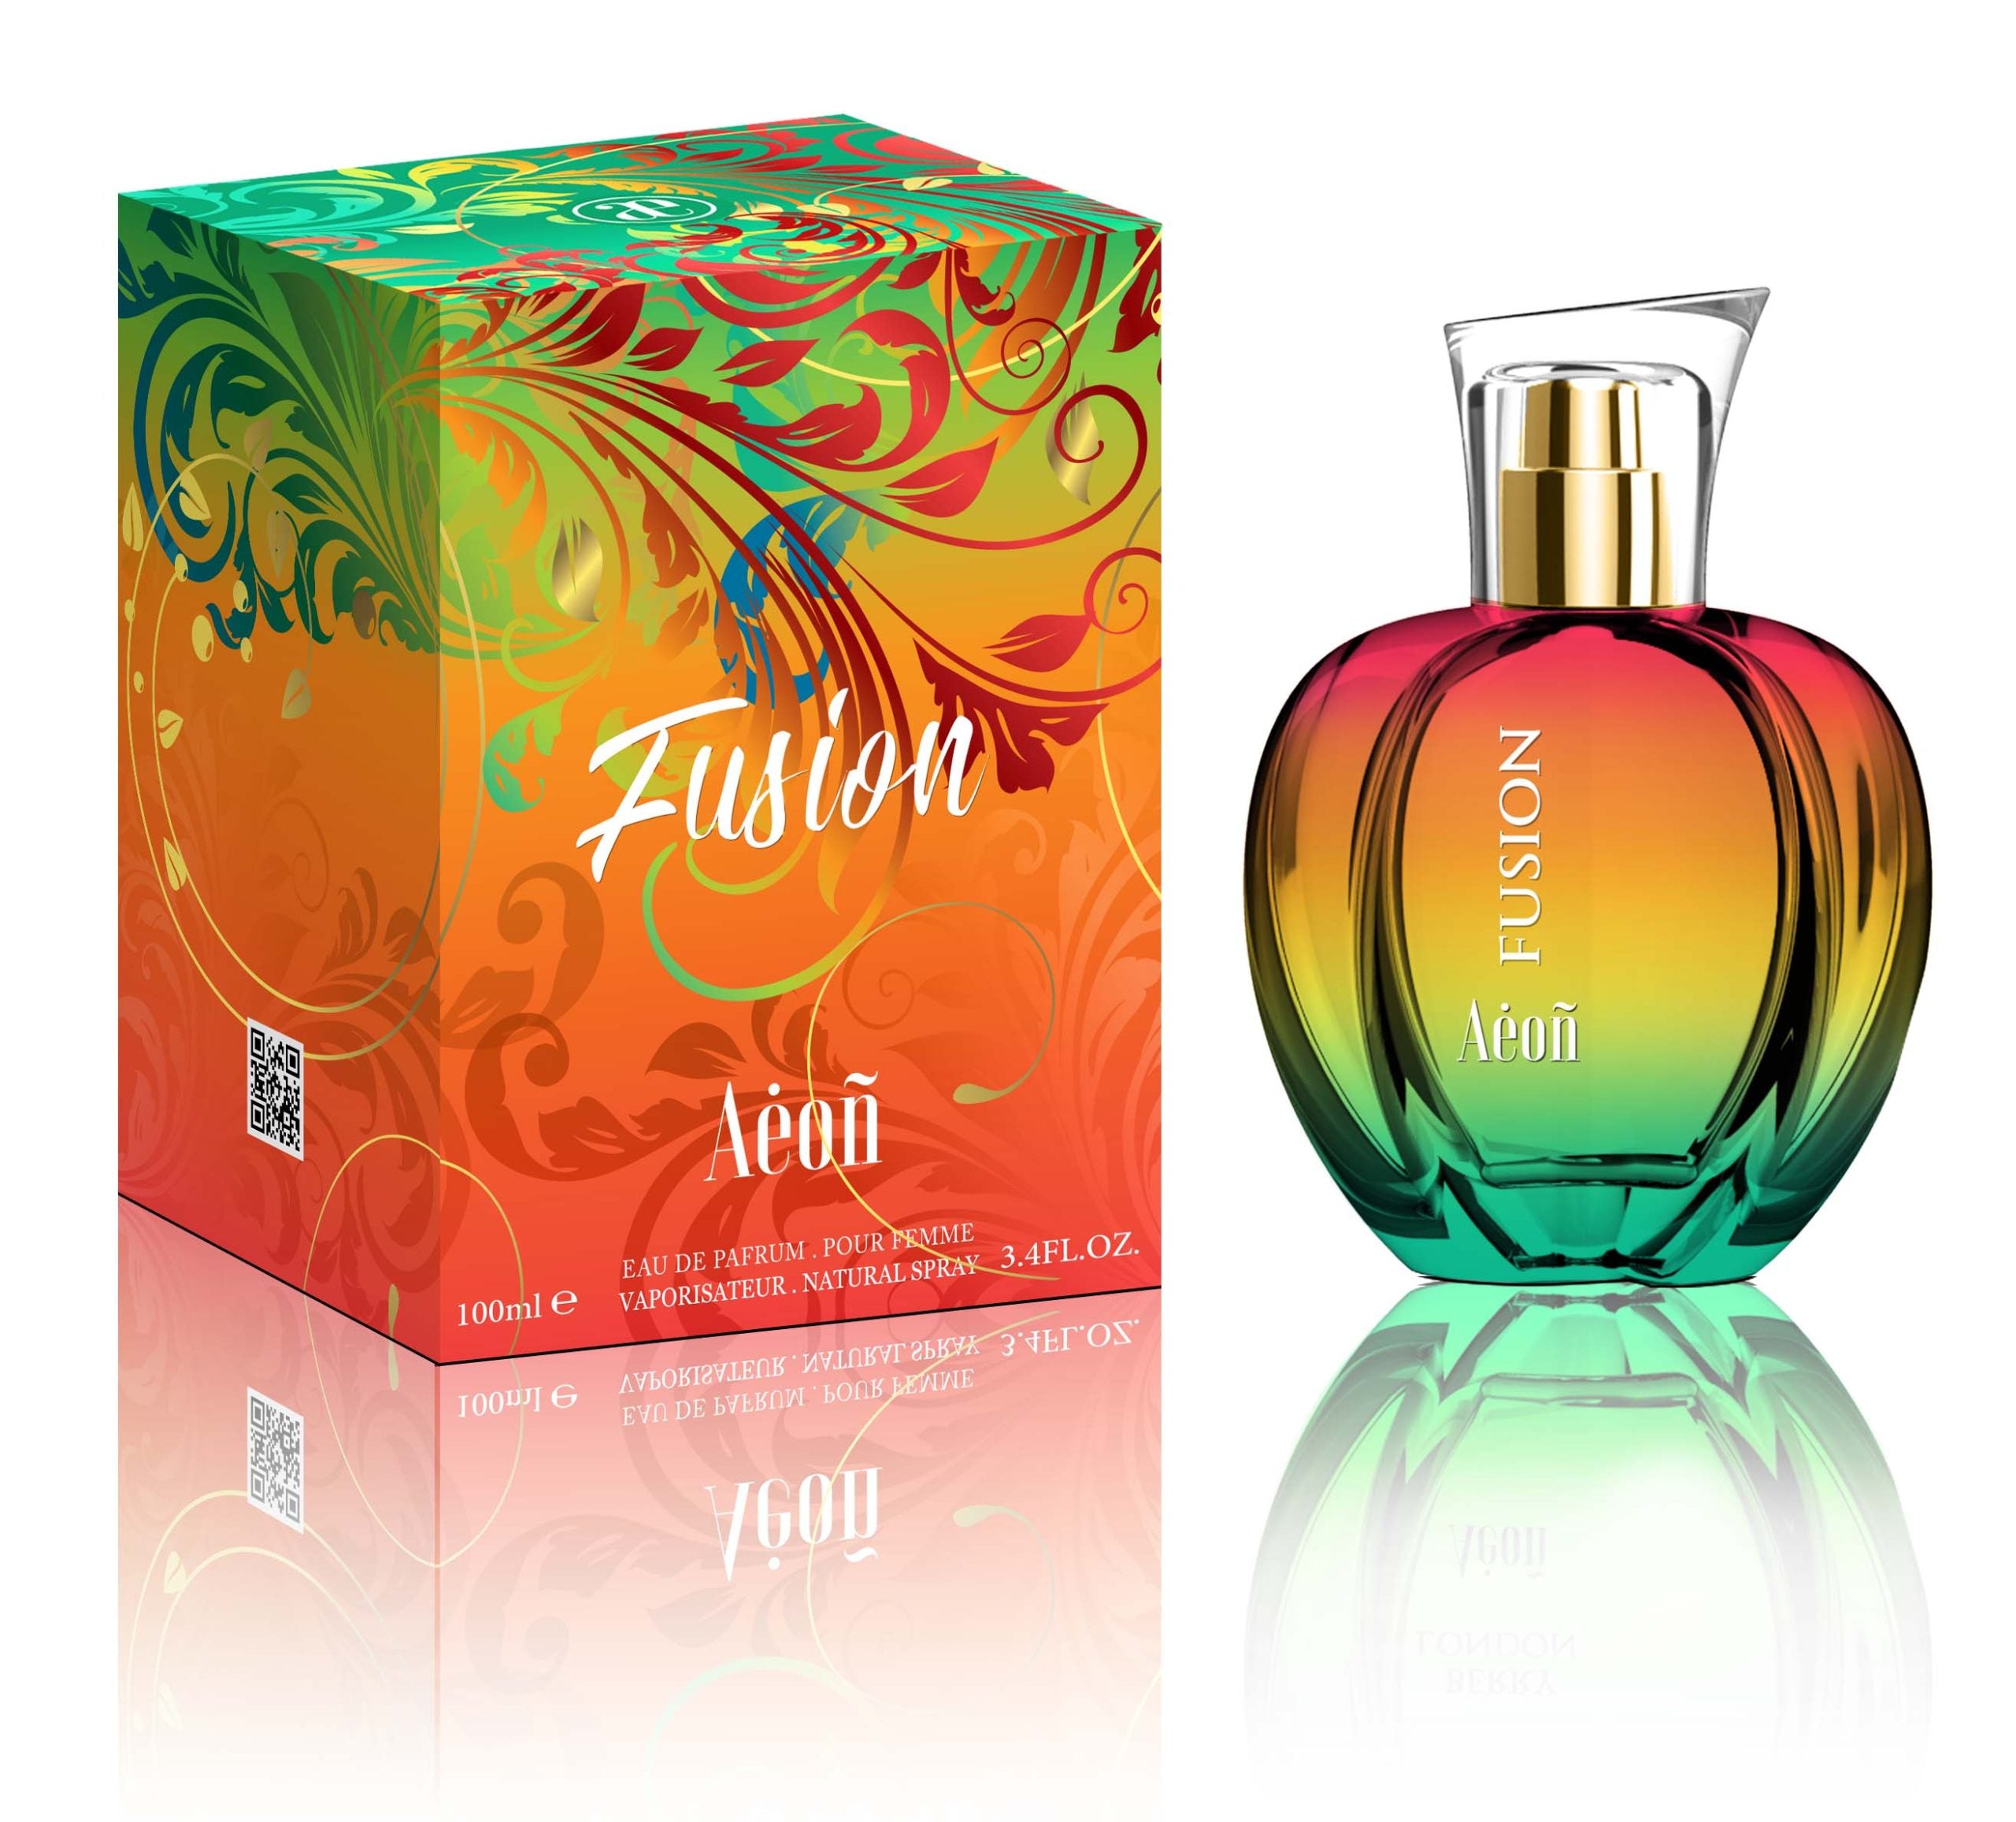 Swiss, Fusion Aeon Eau De Parfum, 100 ml